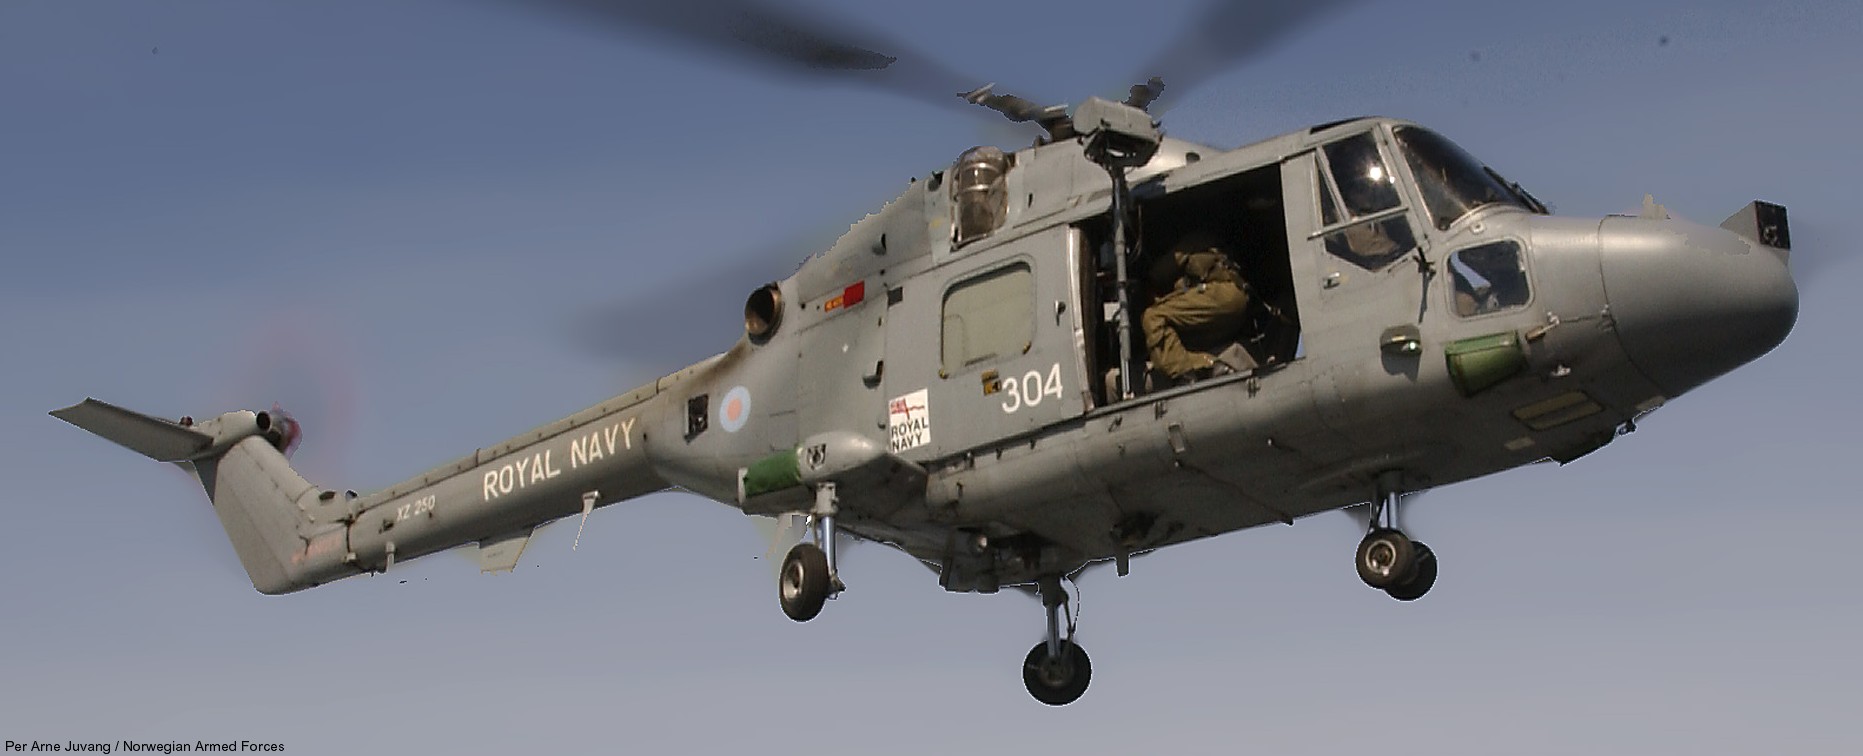 lynx has.3 naval helicopter royal navy westland nas squadron rnas 03